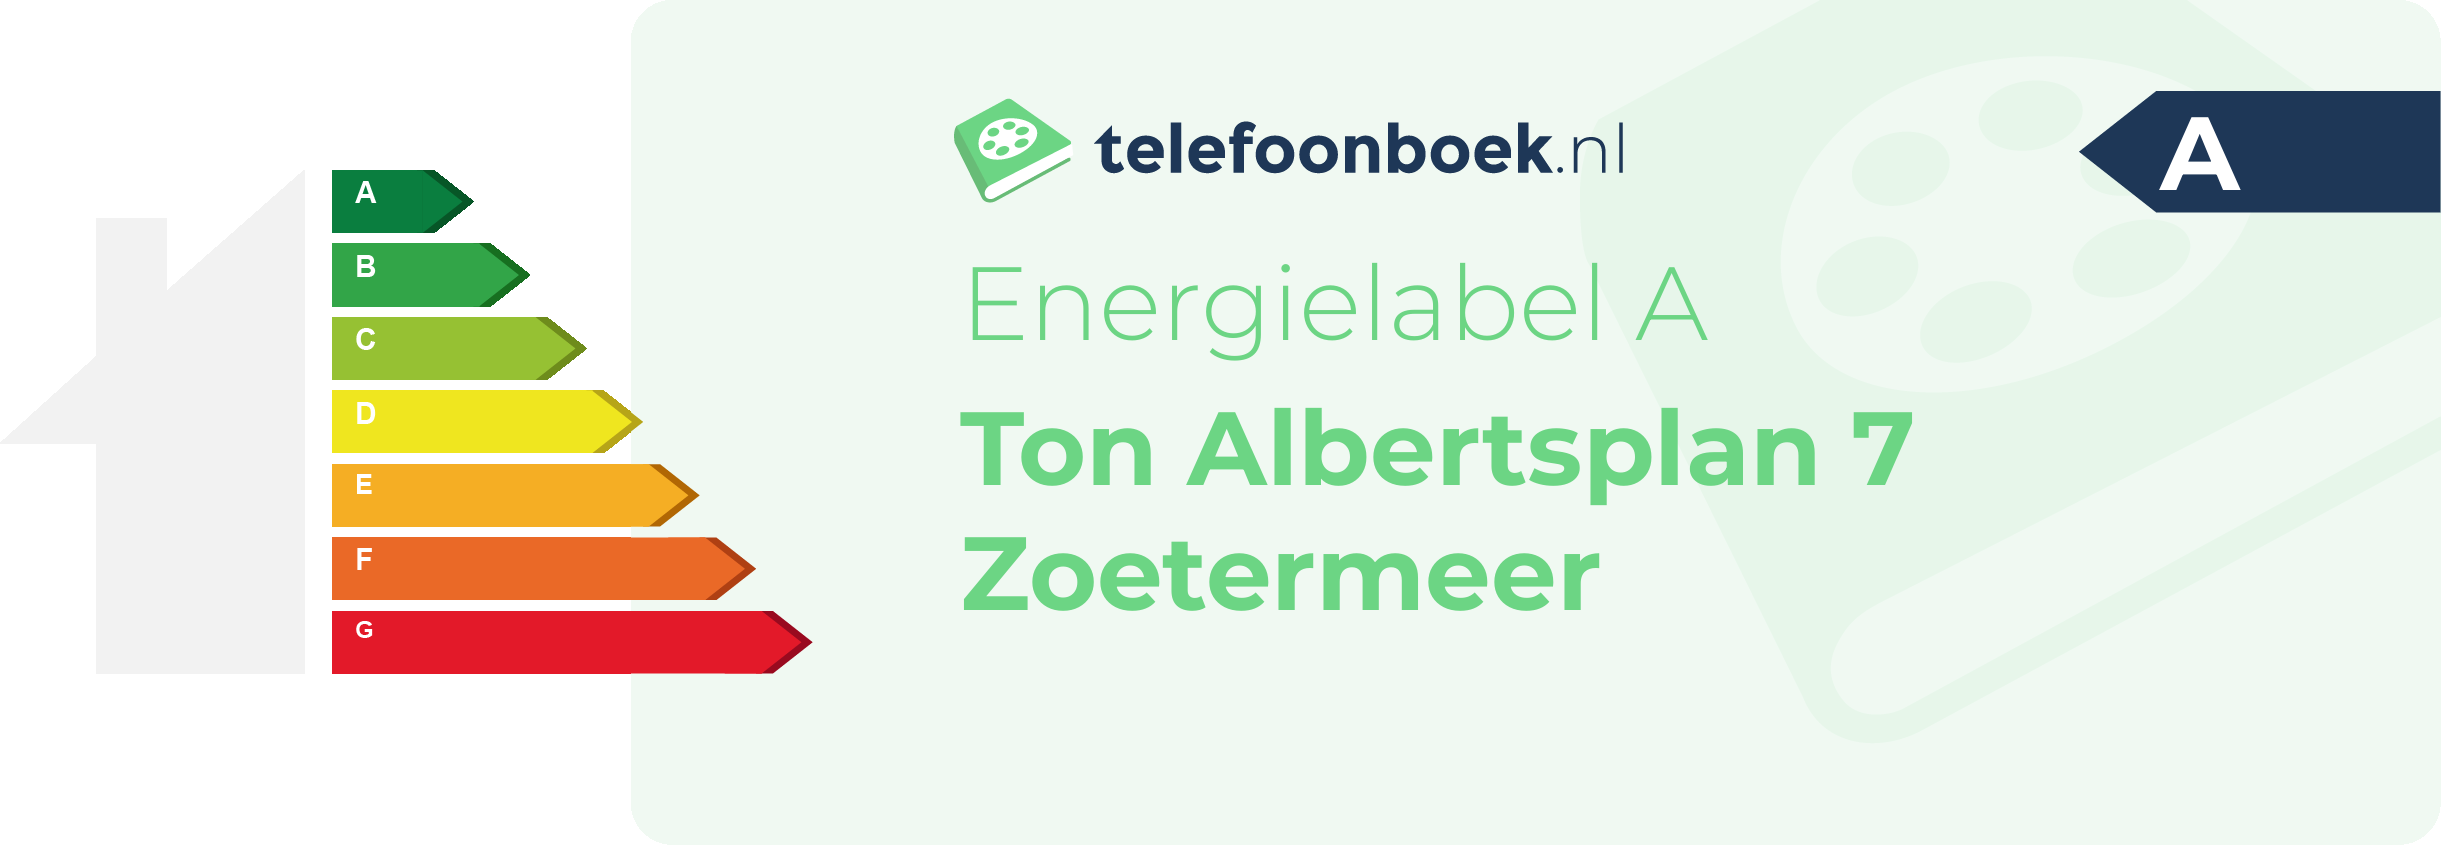 Energielabel Ton Albertsplan 7 Zoetermeer